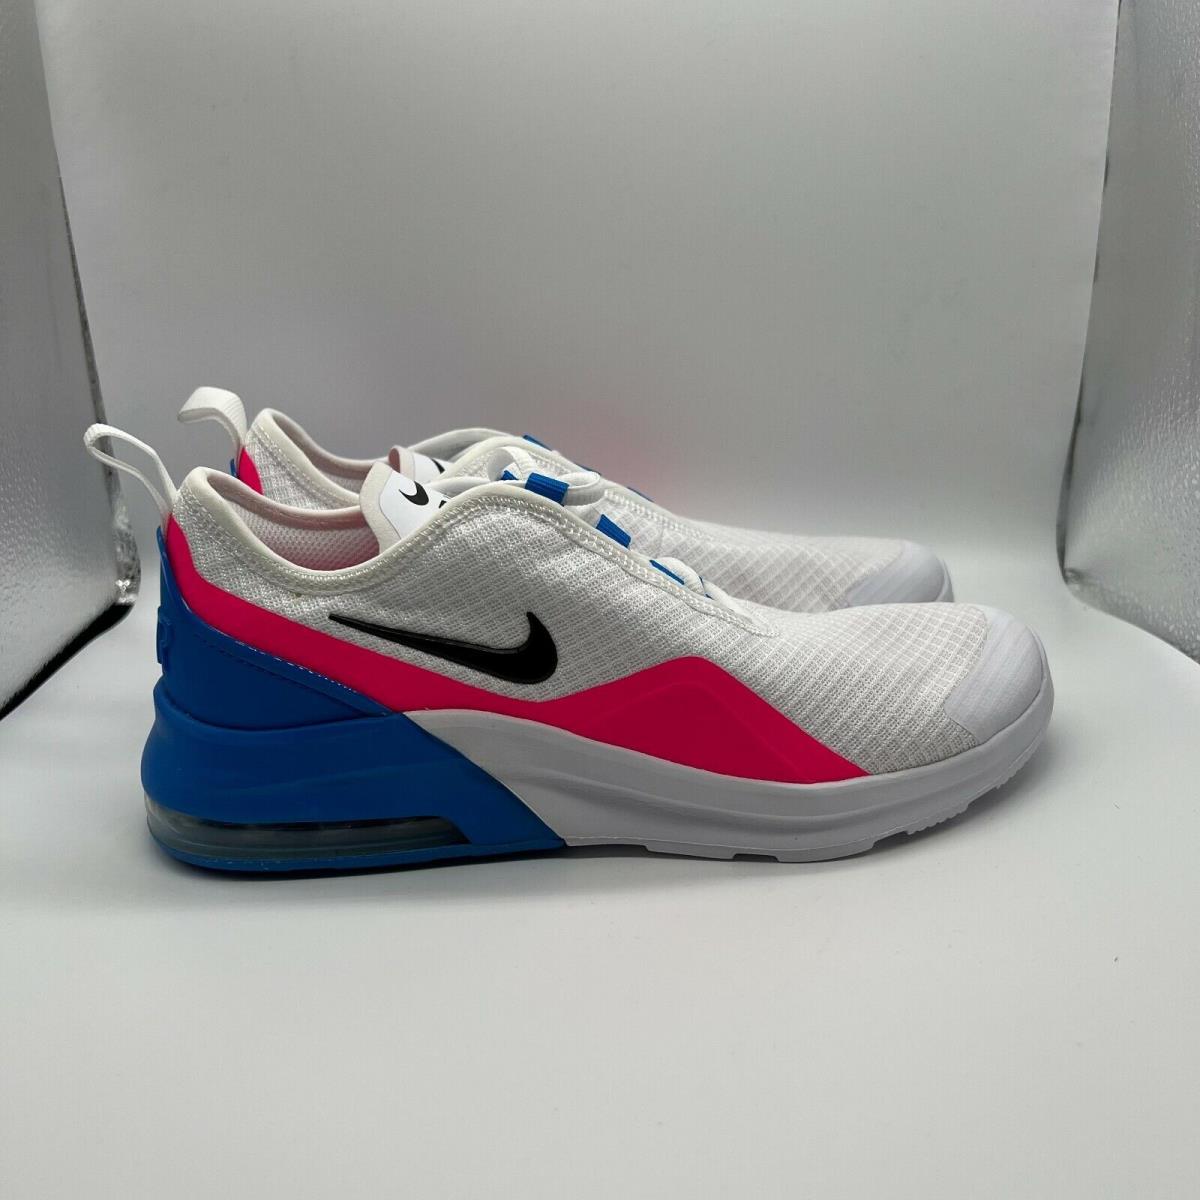 Nike shoes Sneaker Shoes - Multicolor 0